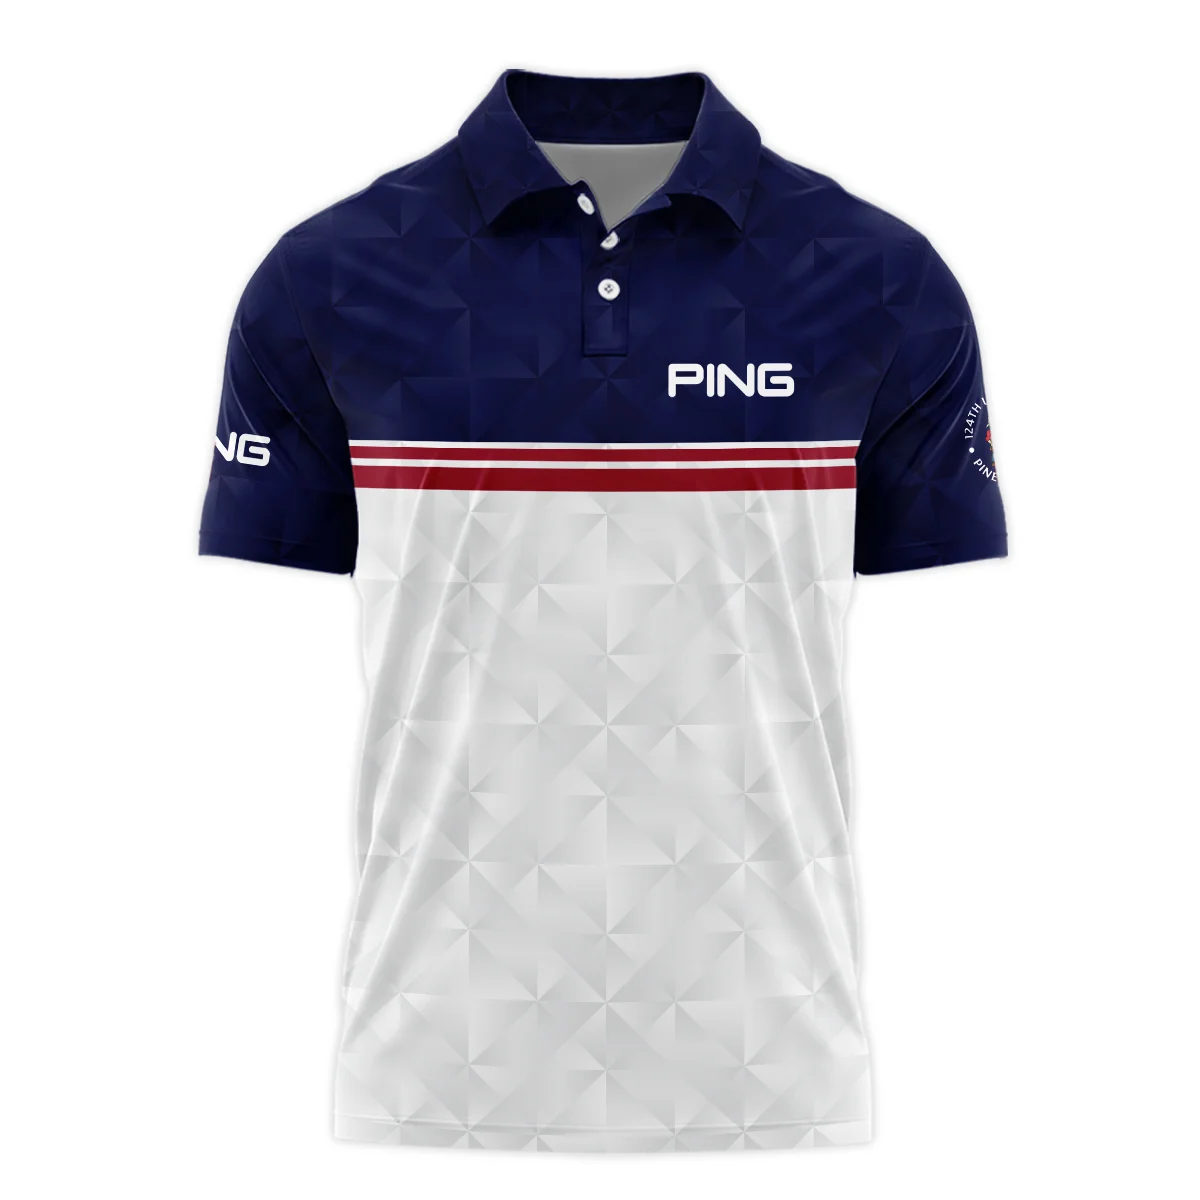 Golf Sport 124th U.S. Open Pinehurst Ping Sleeveless Jacket Dark Blue White Abstract Geometric Triangles All Over Print Sleeveless Jacket